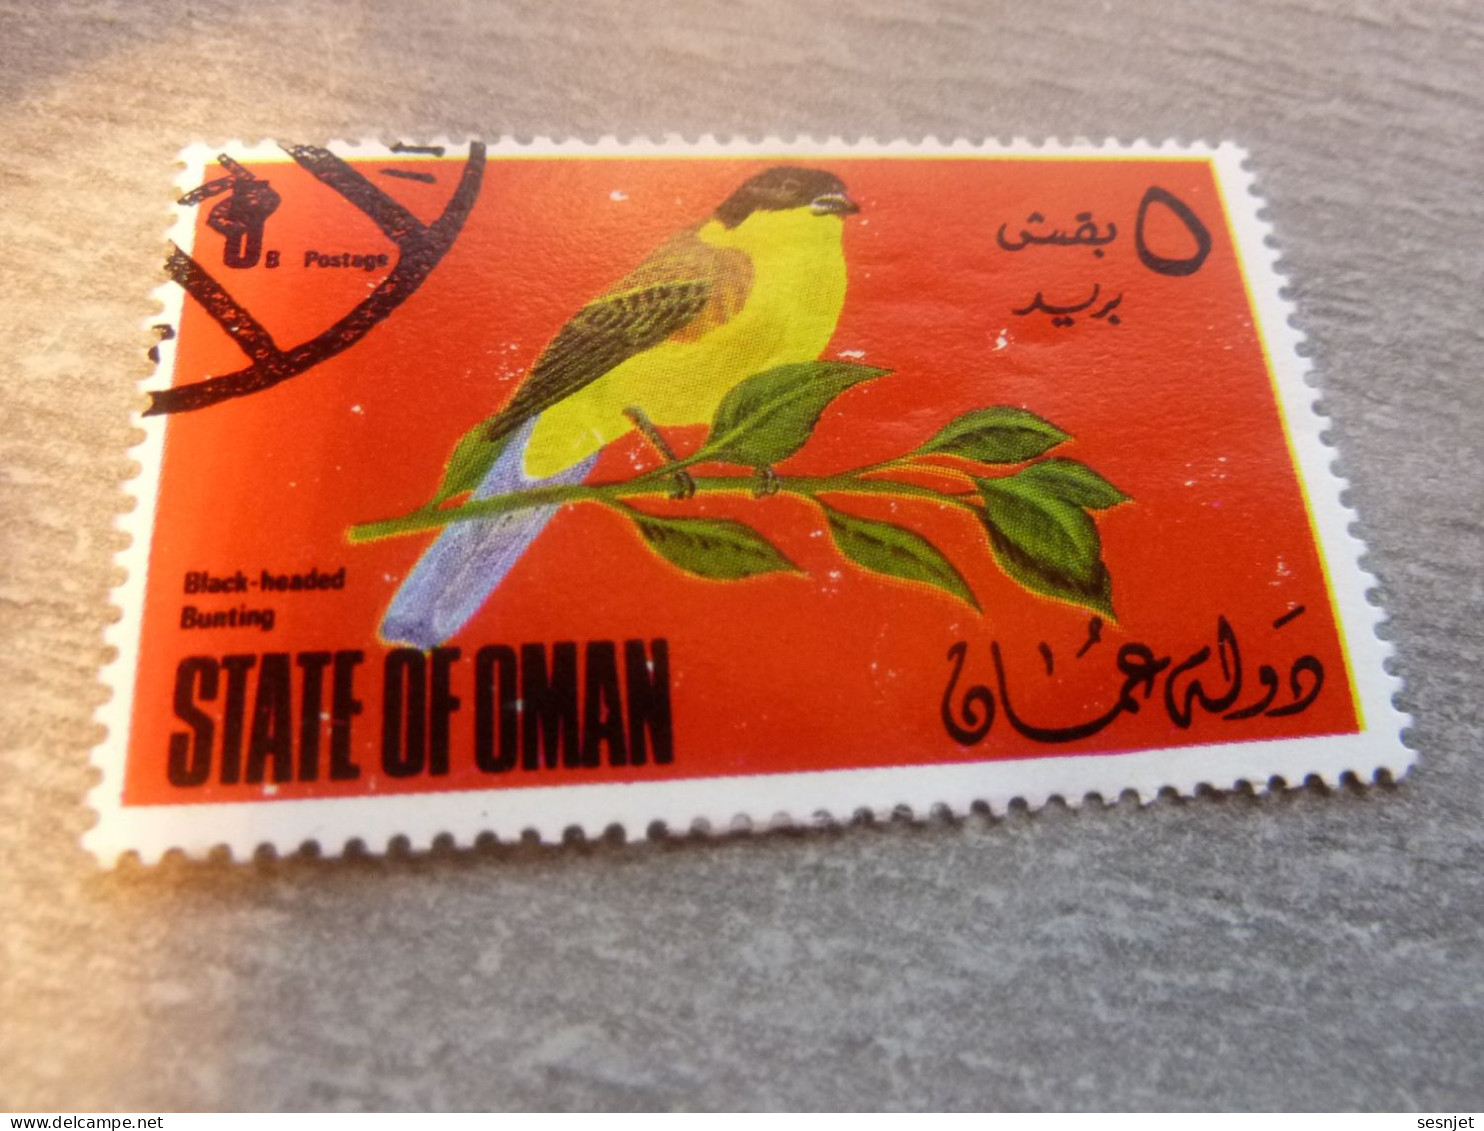 State Of Oman - Black-Headed - Bunting -  Val 5 B - Postage - Polychrome - Oblitéré - Année 1970 - - Spatzen